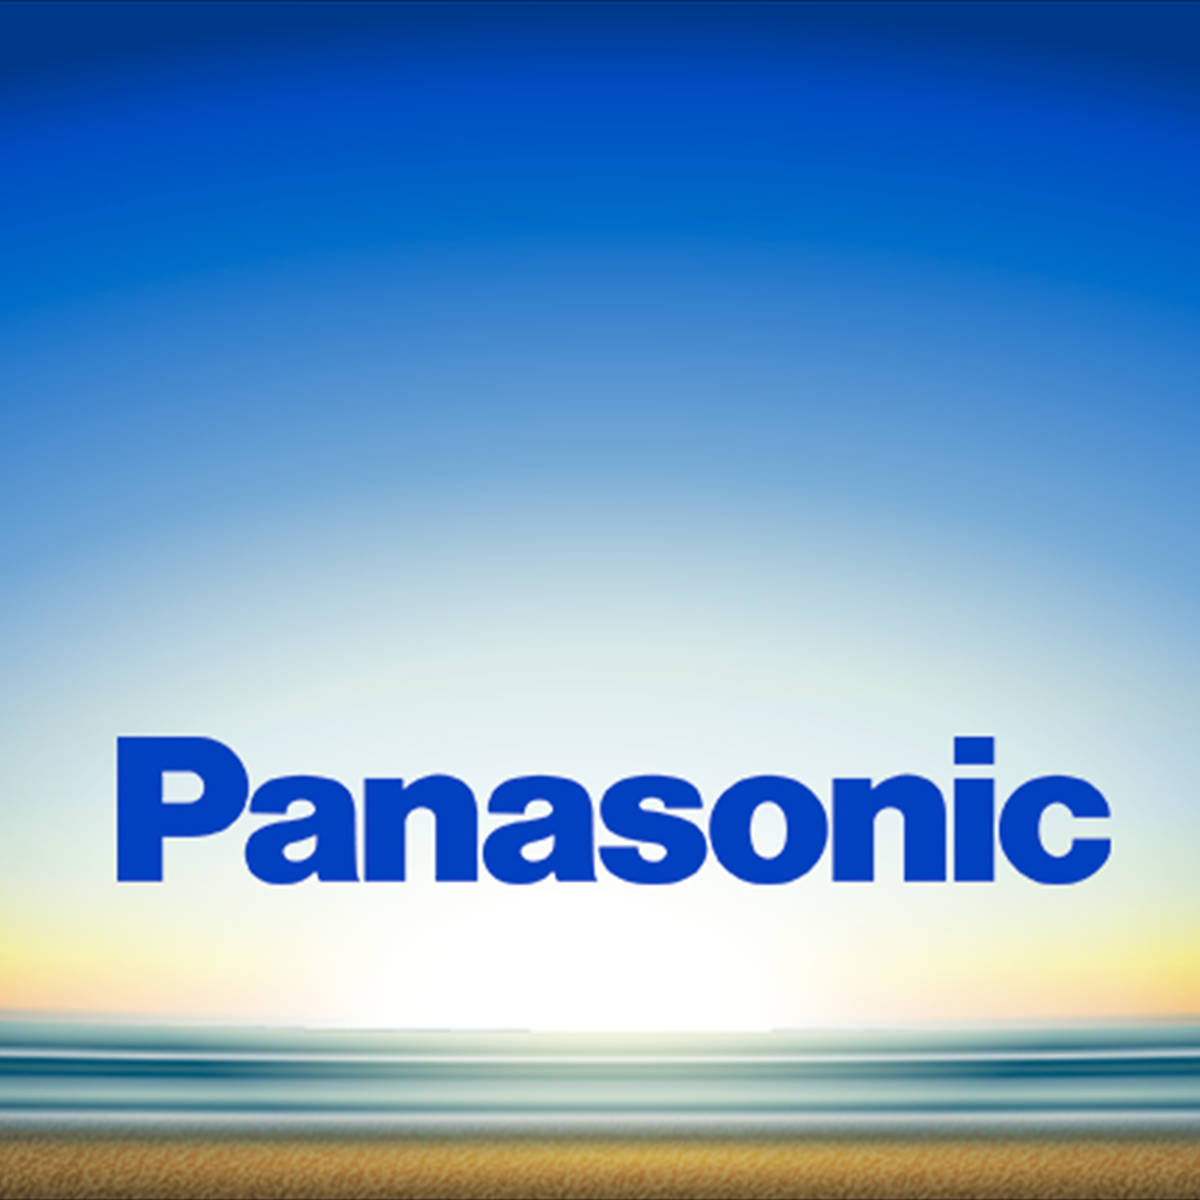 Panasonic And Blue Sky Wallpaper